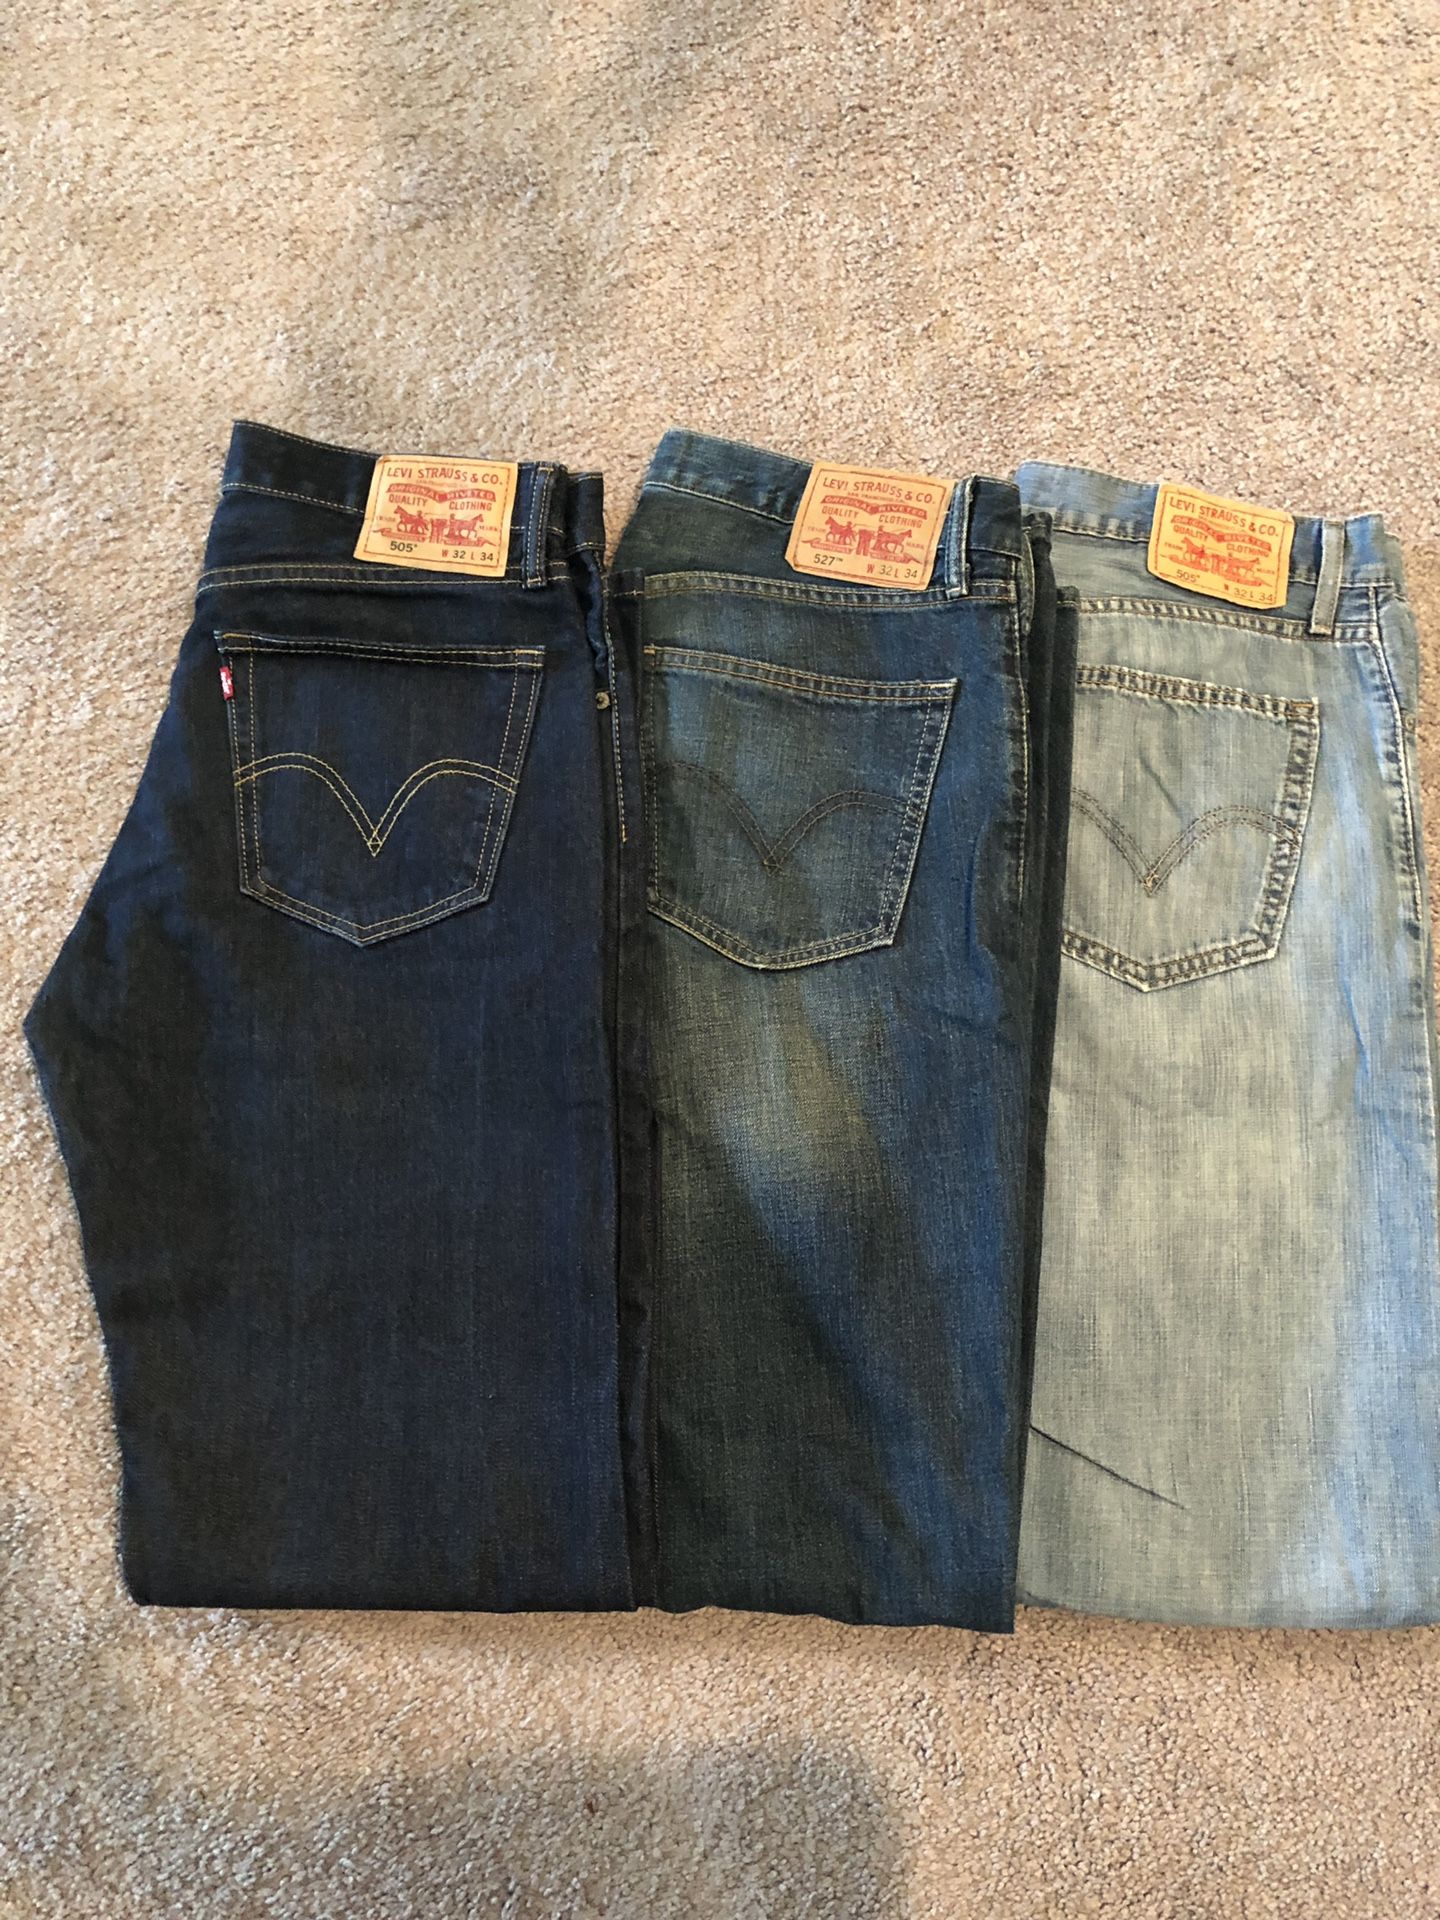 3 pairs of men’s Levi’s jeans-32x34